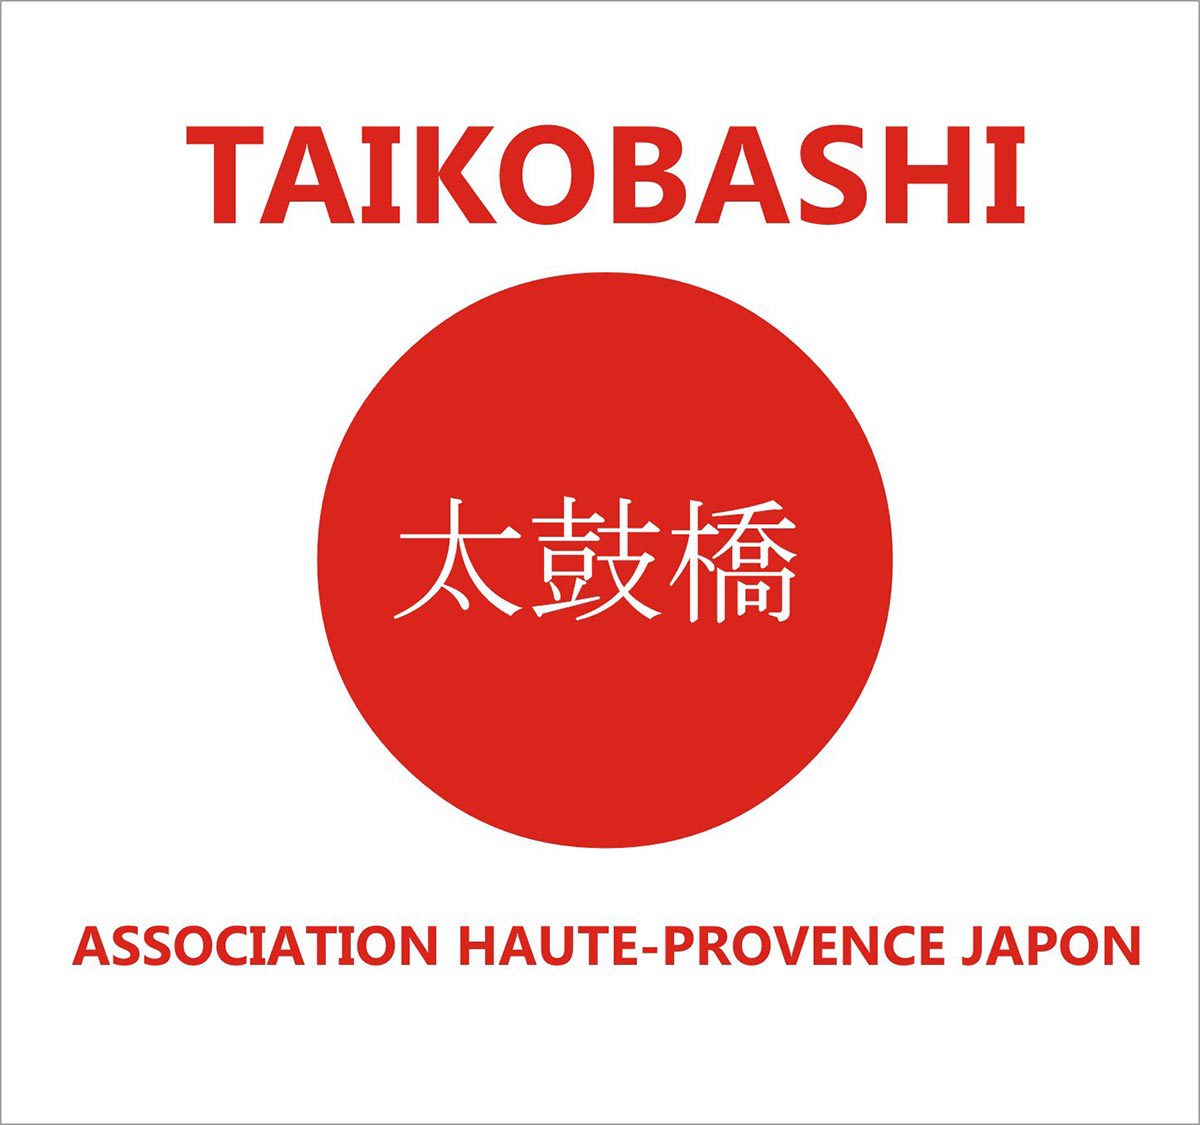 Taikobashi - Haute provence